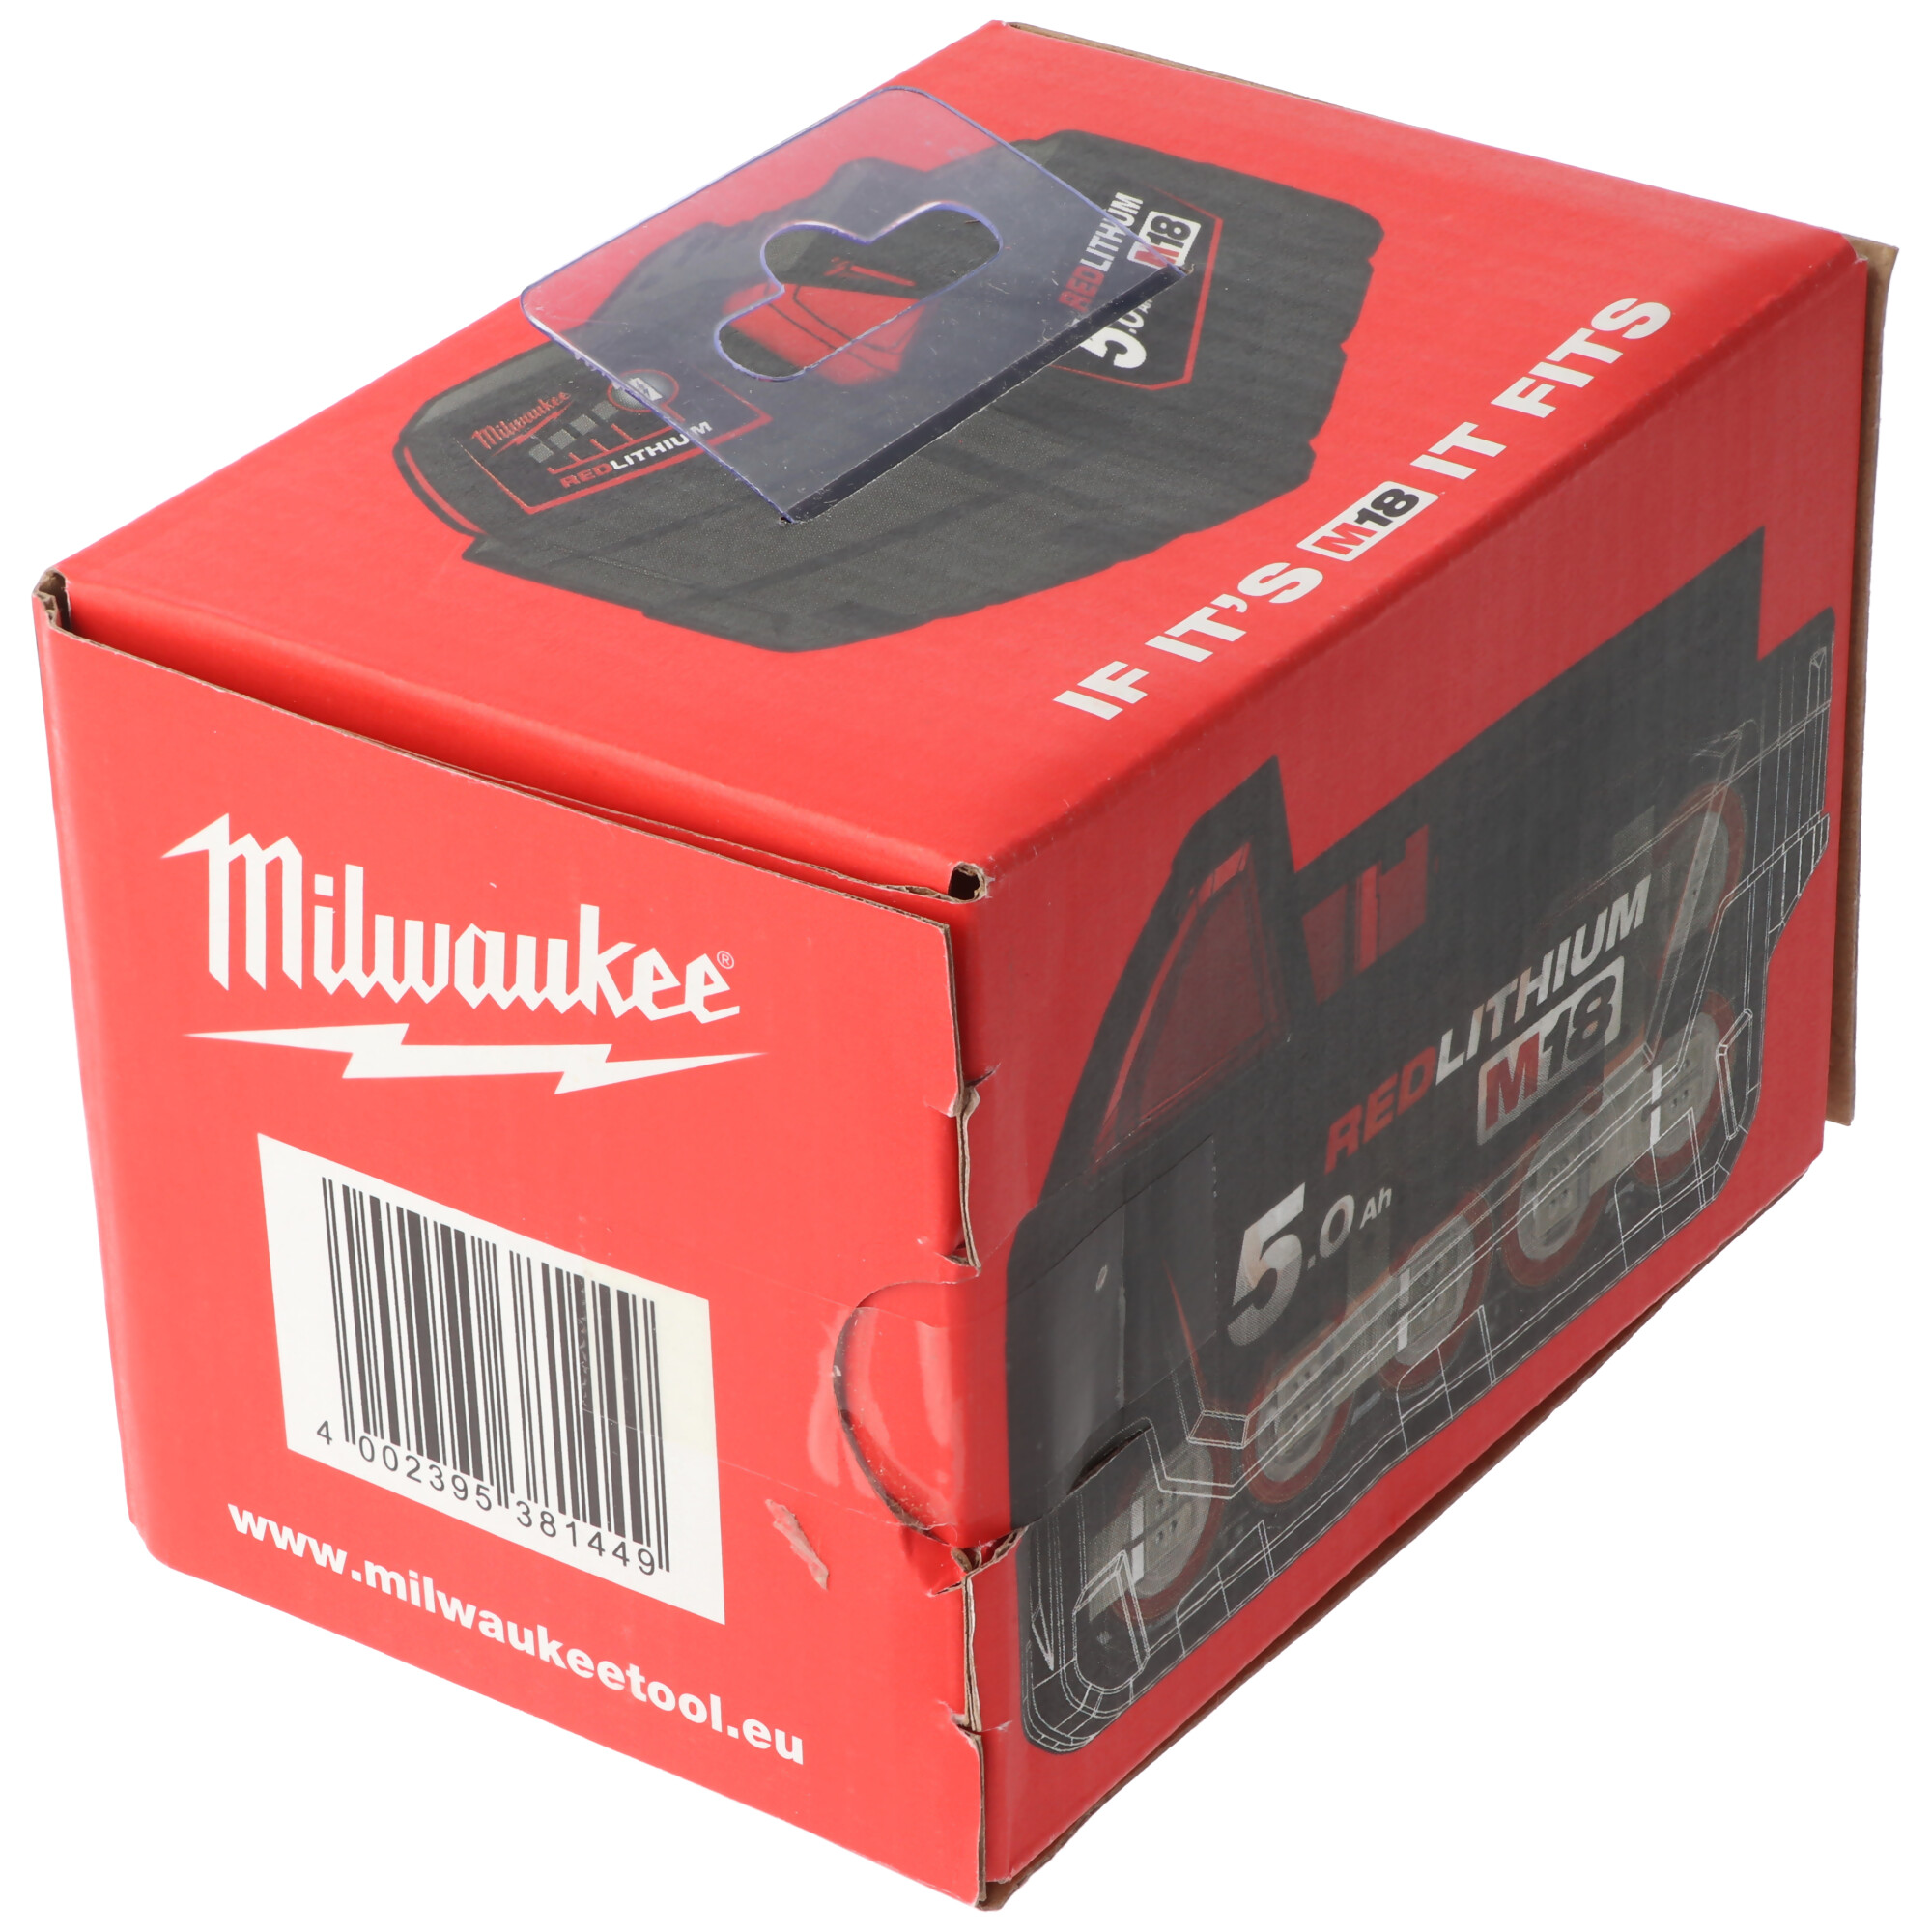 Original Milwaukee M18, M18B5 Red Lithium Akku Li-on 18V 5,0Ah, Akku Weitkowitz Stilo Cut 50